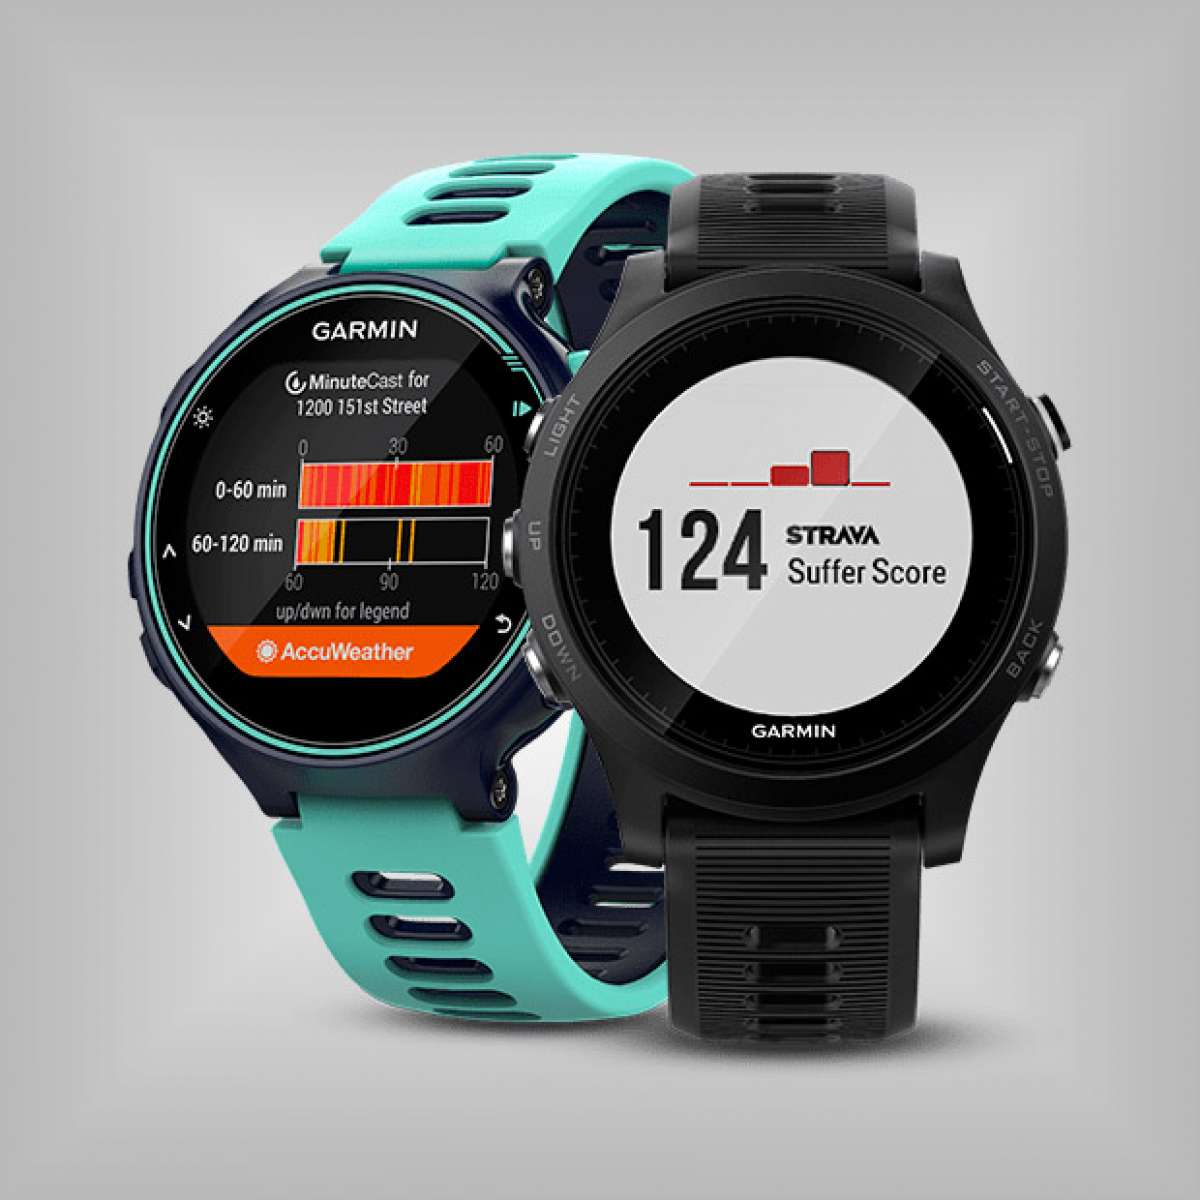 En TodoMountainBike: Garmin Forerunner 935, el reloj GPS definitivo para atletas multidisciplinares